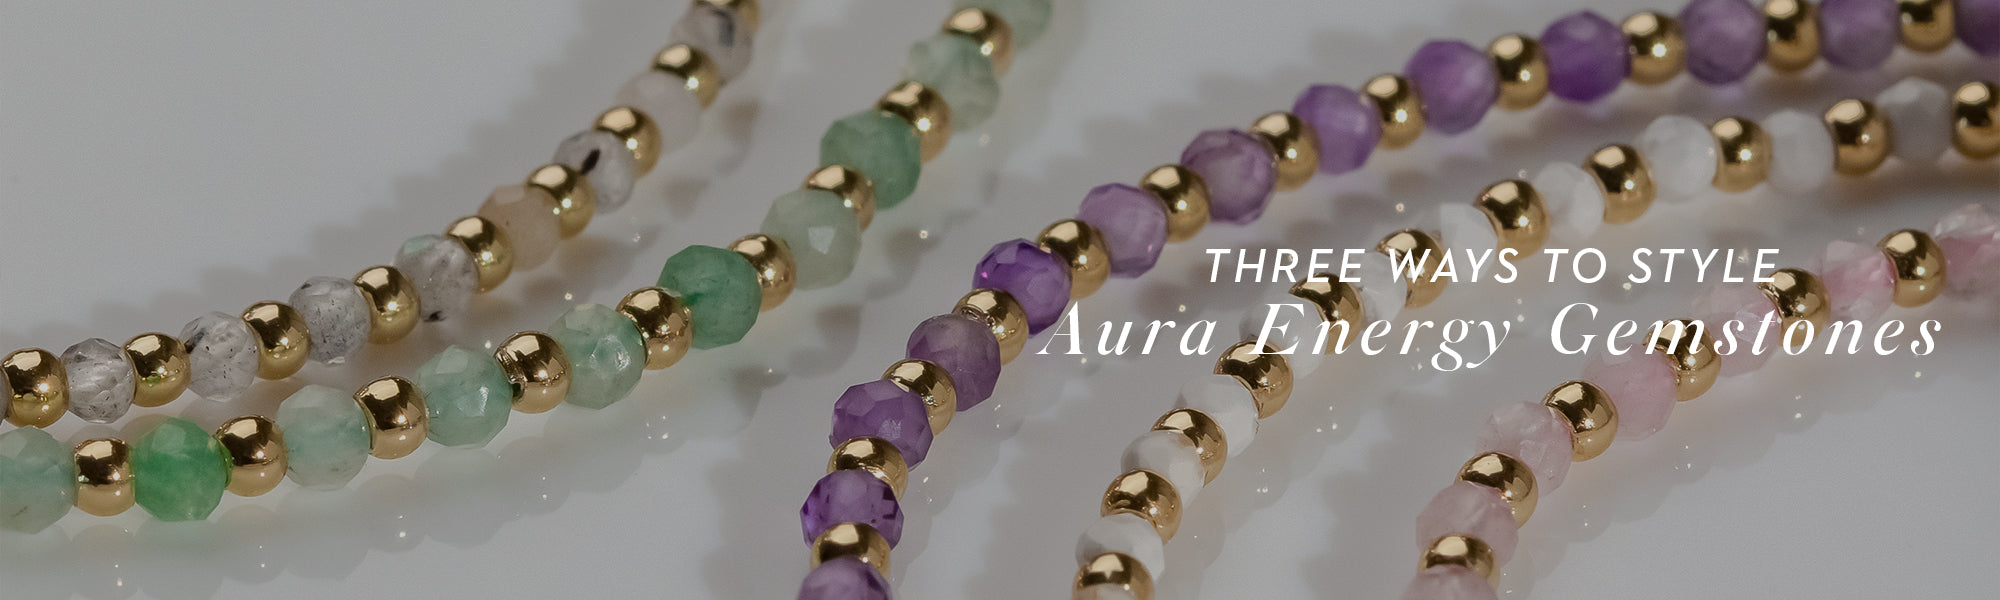 Three Ways To Style Aura Energy Gemstones